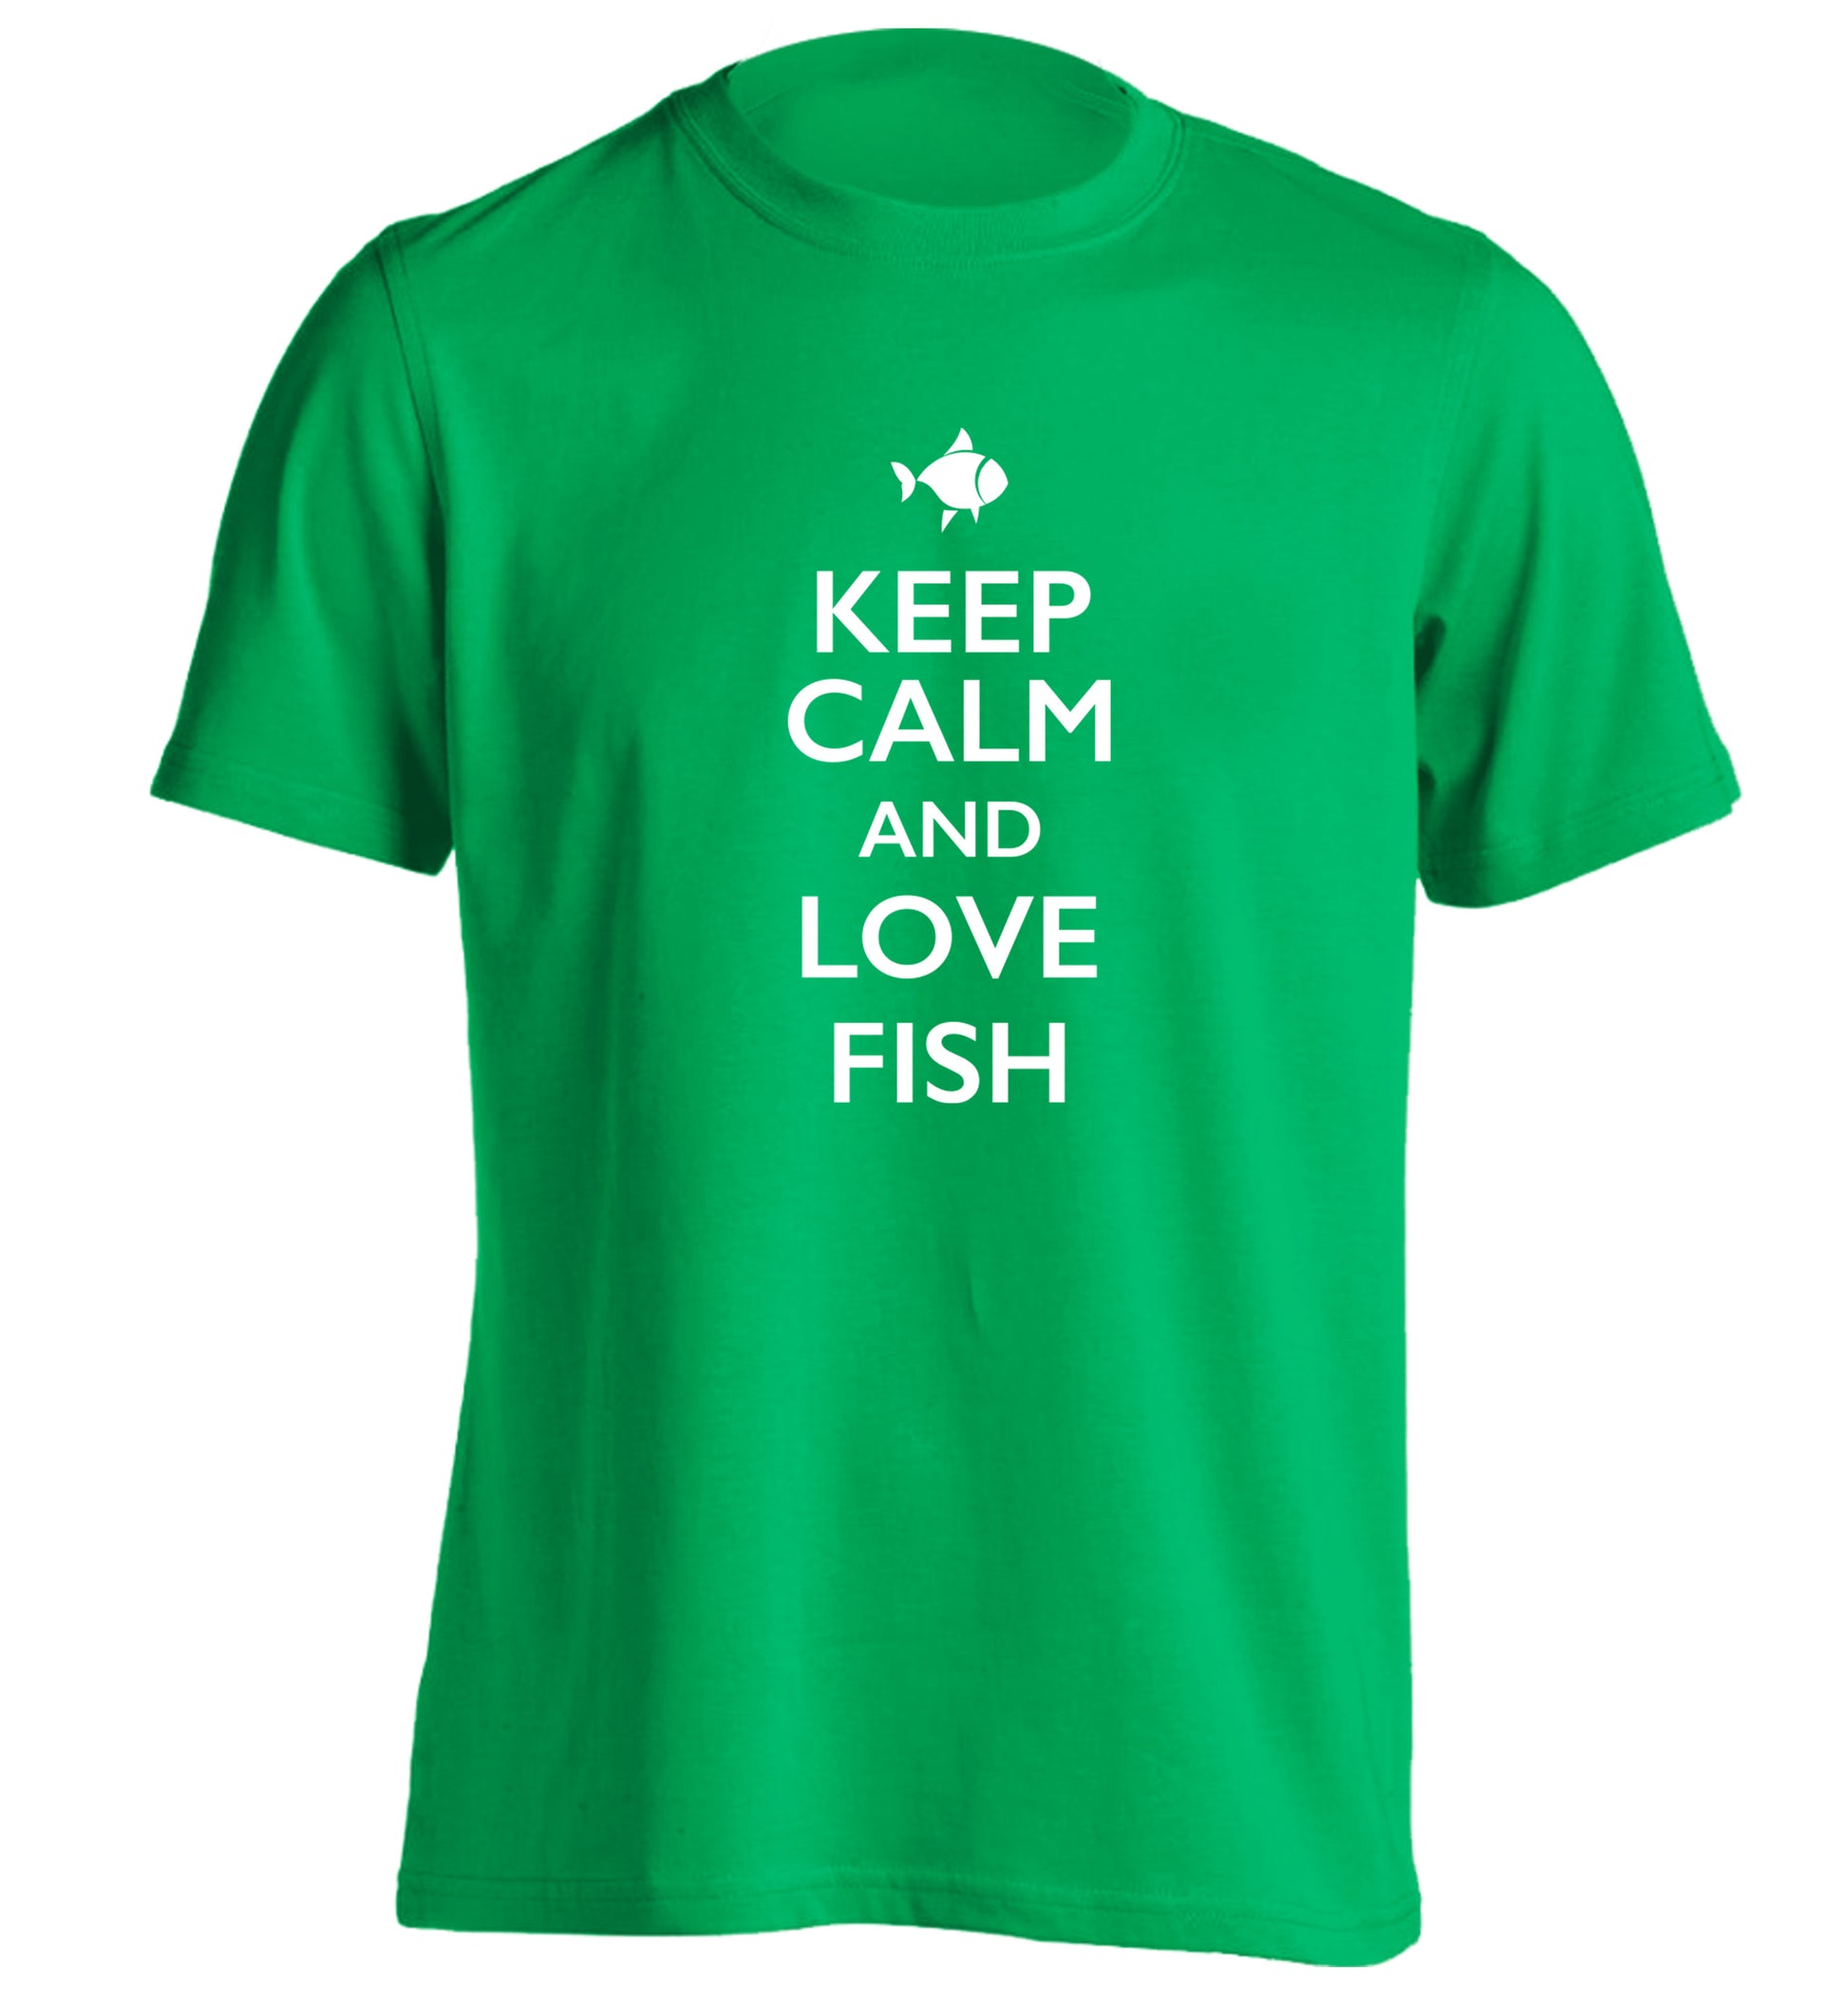 Keep calm and love fish adults unisex green Tshirt 2XL